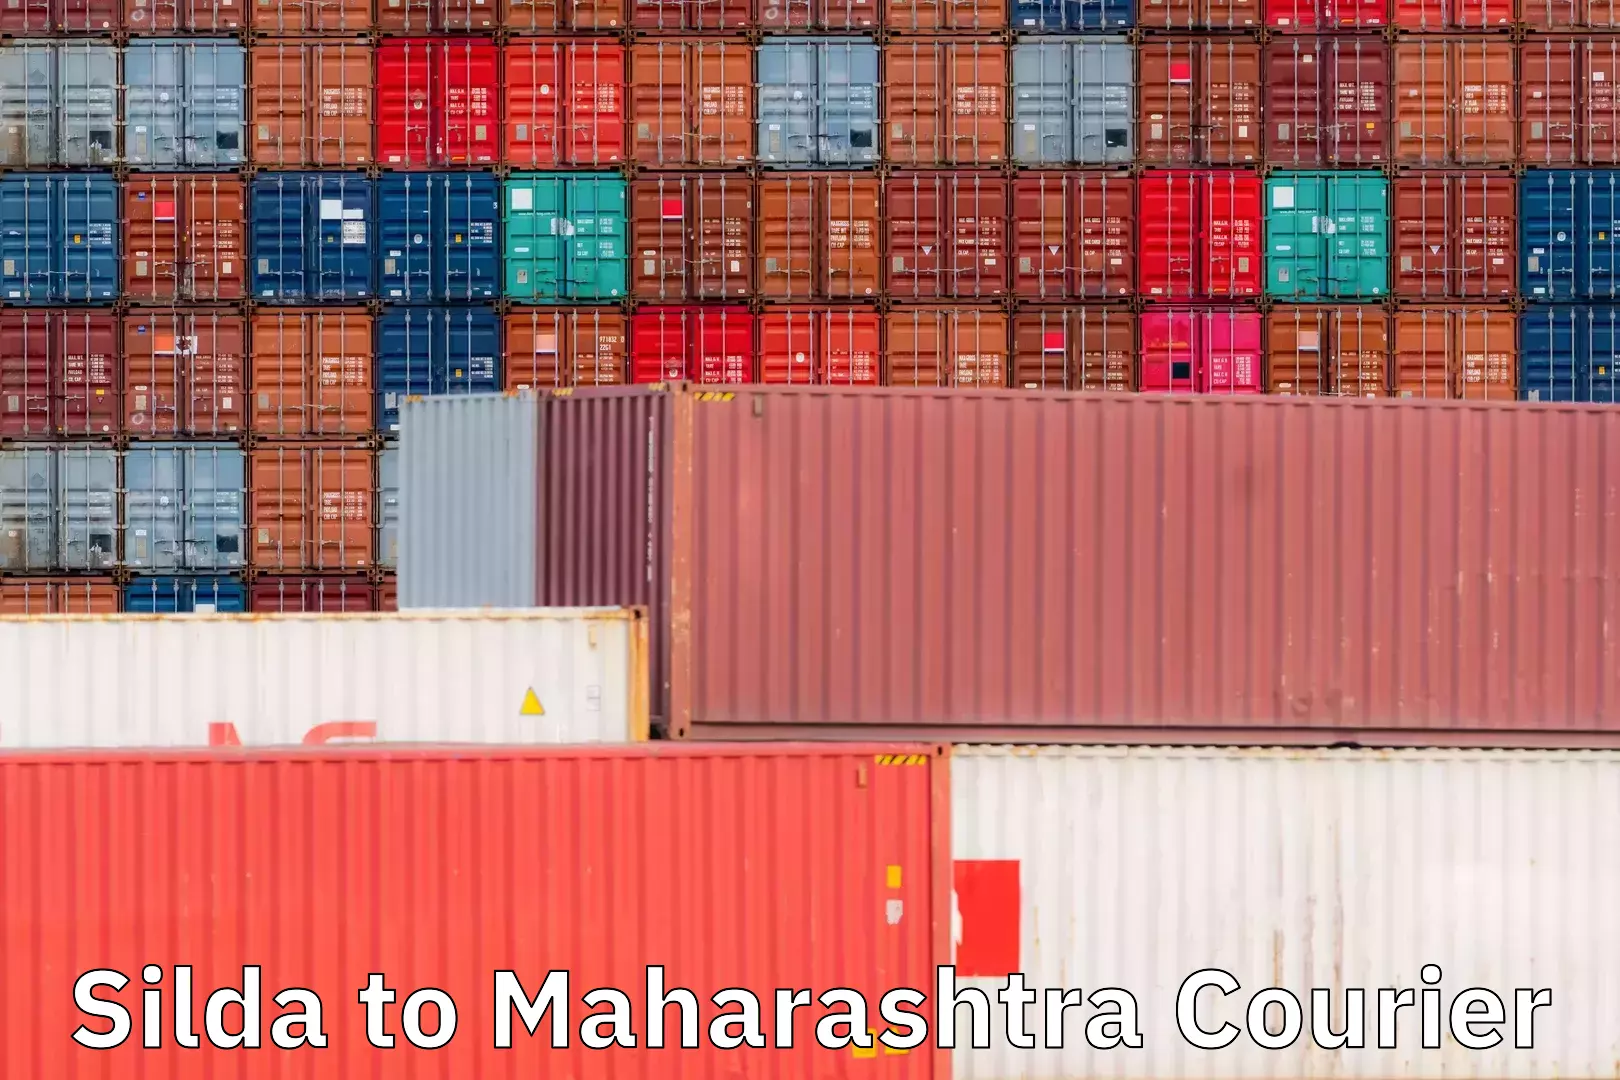 Courier service innovation Silda to Maharashtra